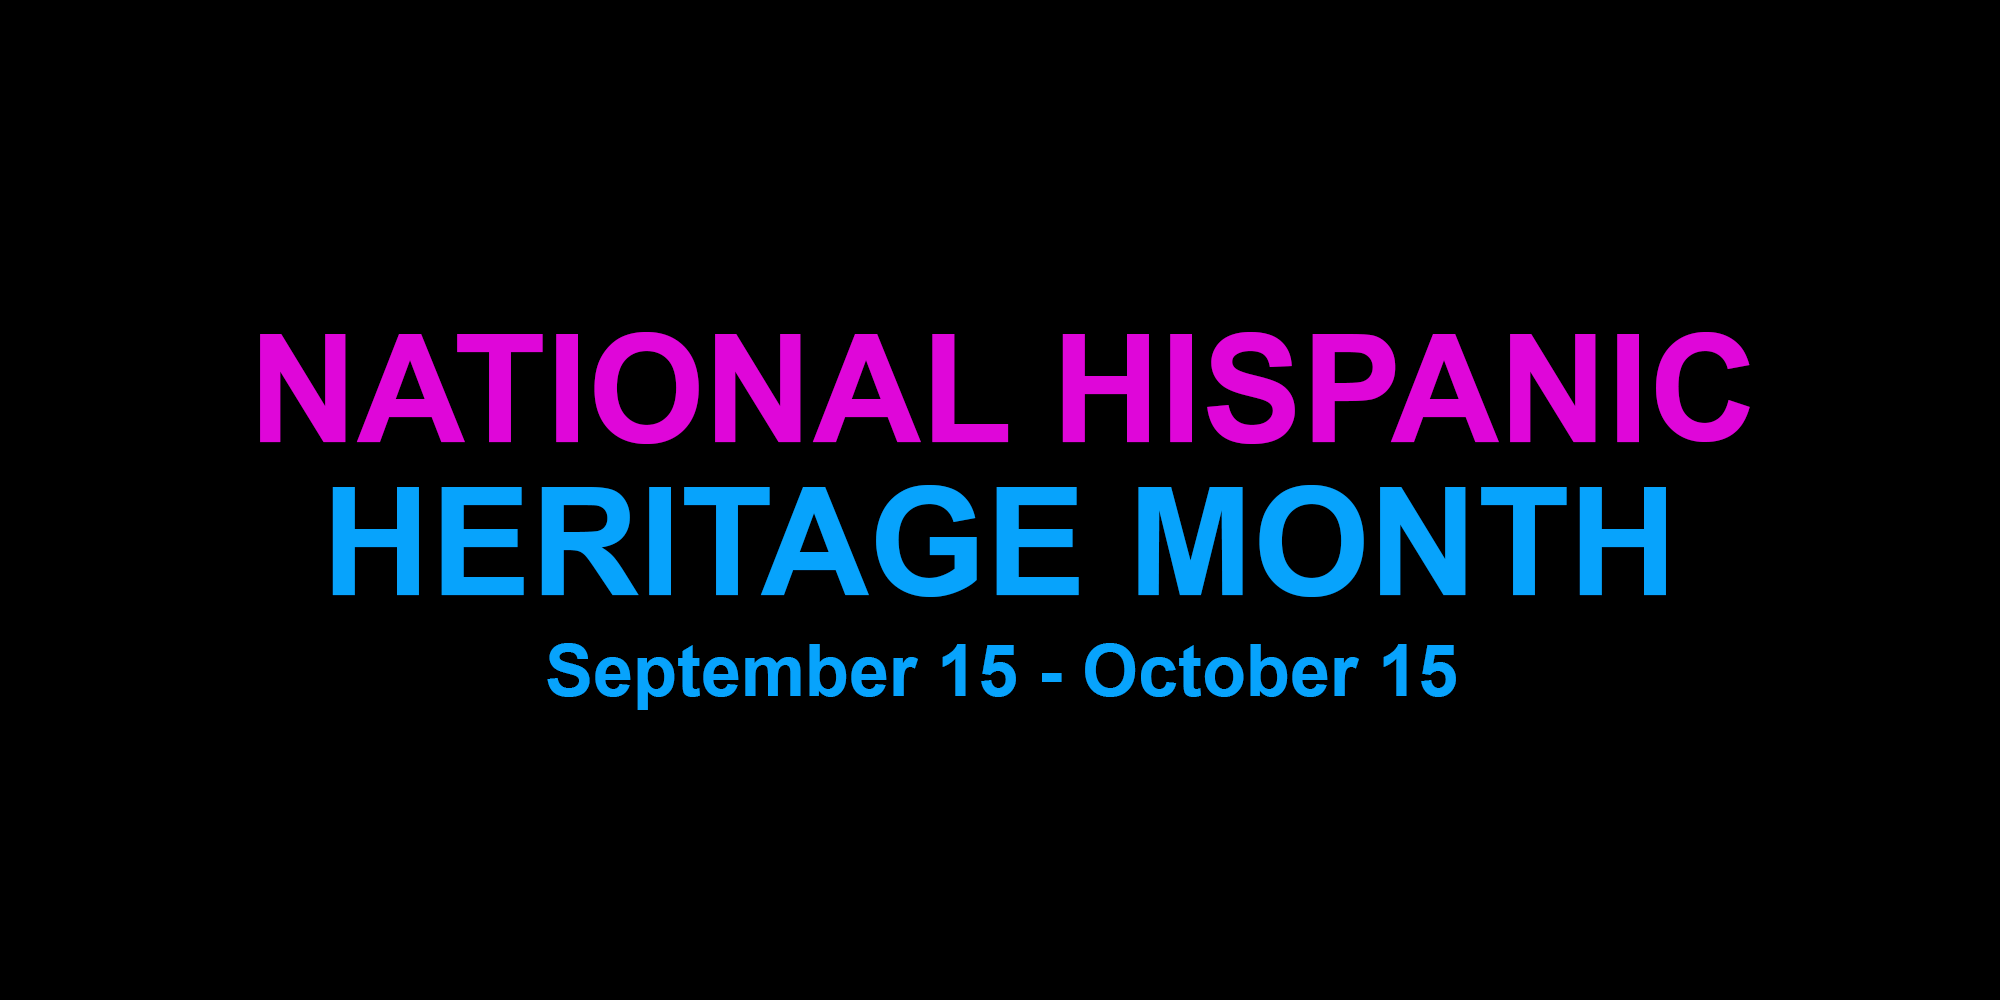 National Hispanic Heritage Month: September 15 - October 15